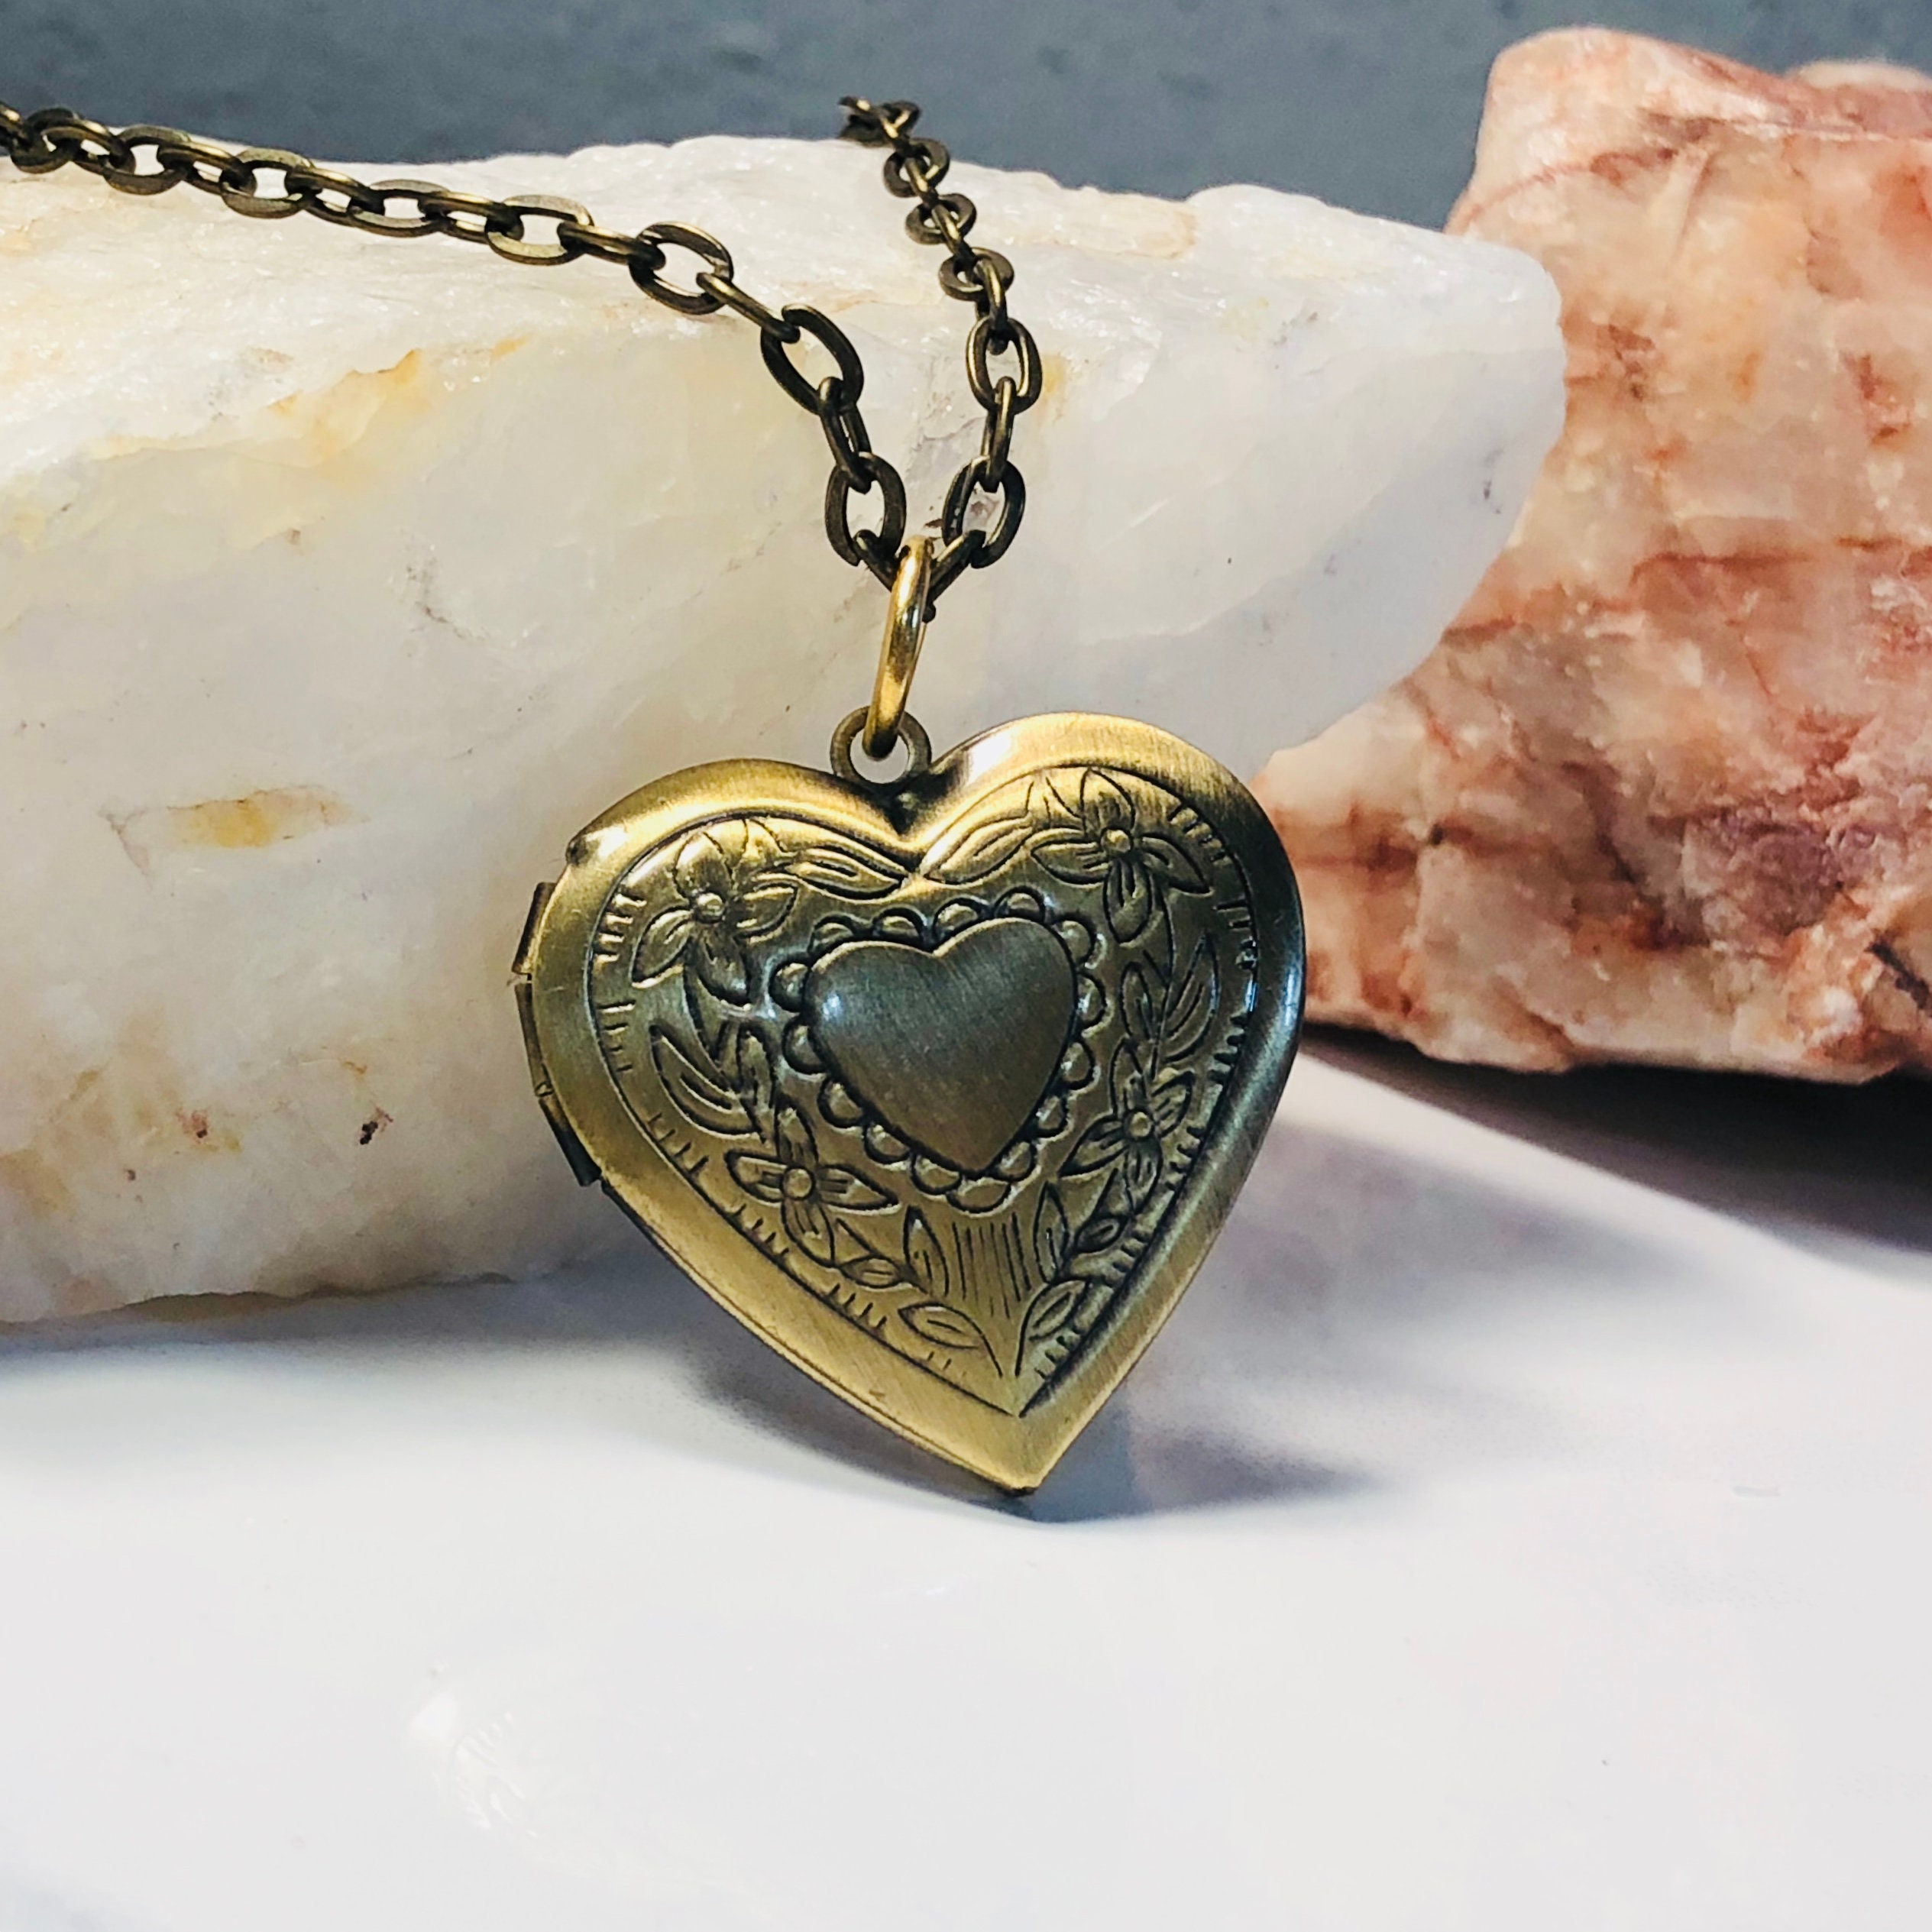 DIY breastmilk jewellery kits – White heart keepsakes